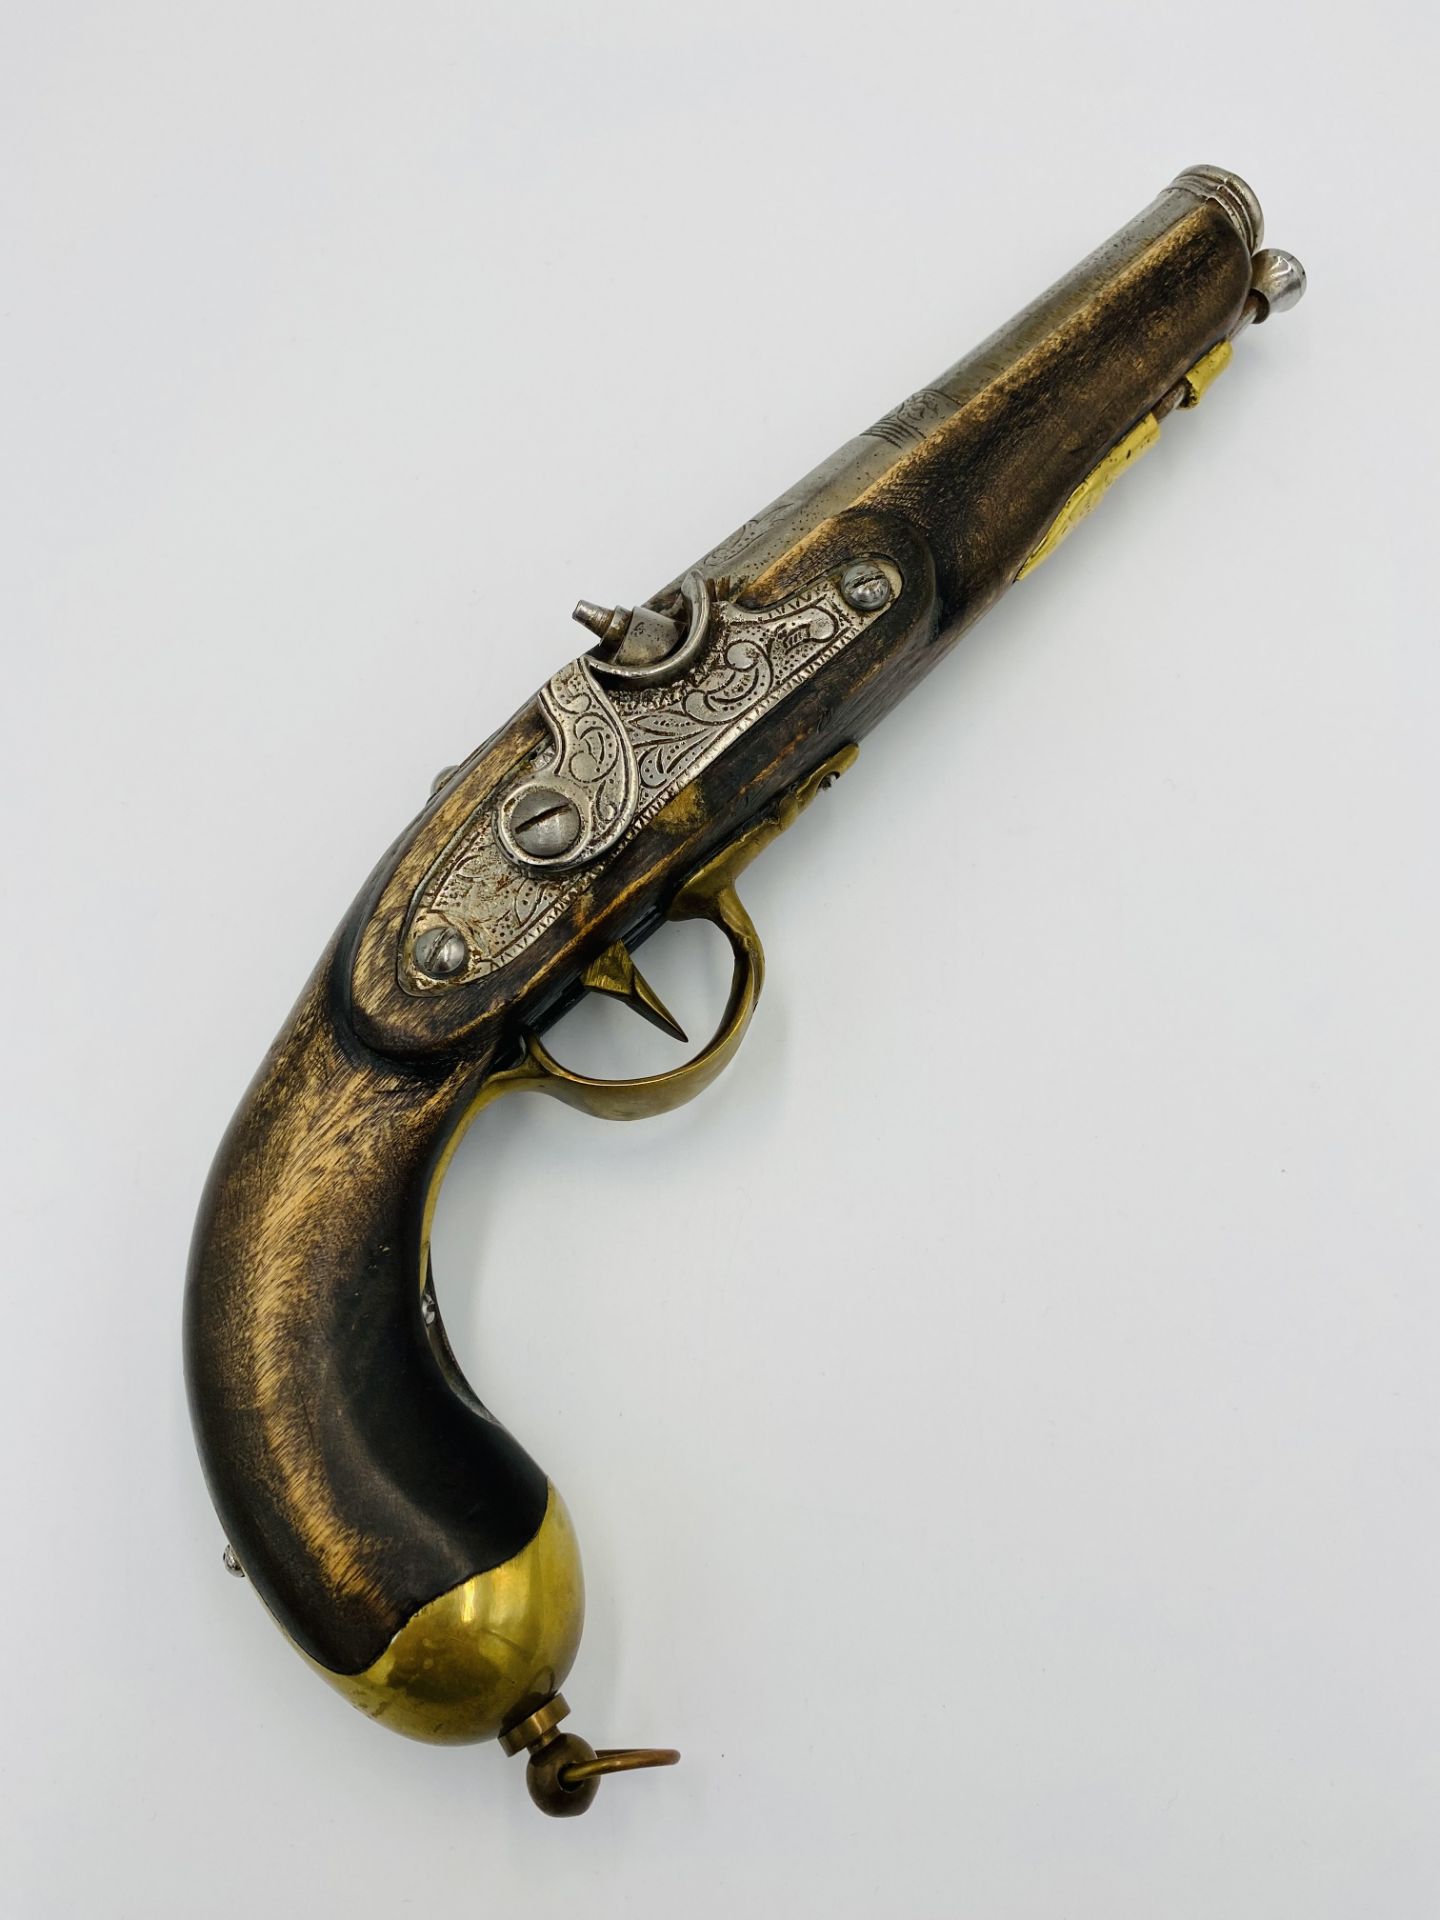 19th century flintlock pistol - Image 2 of 6